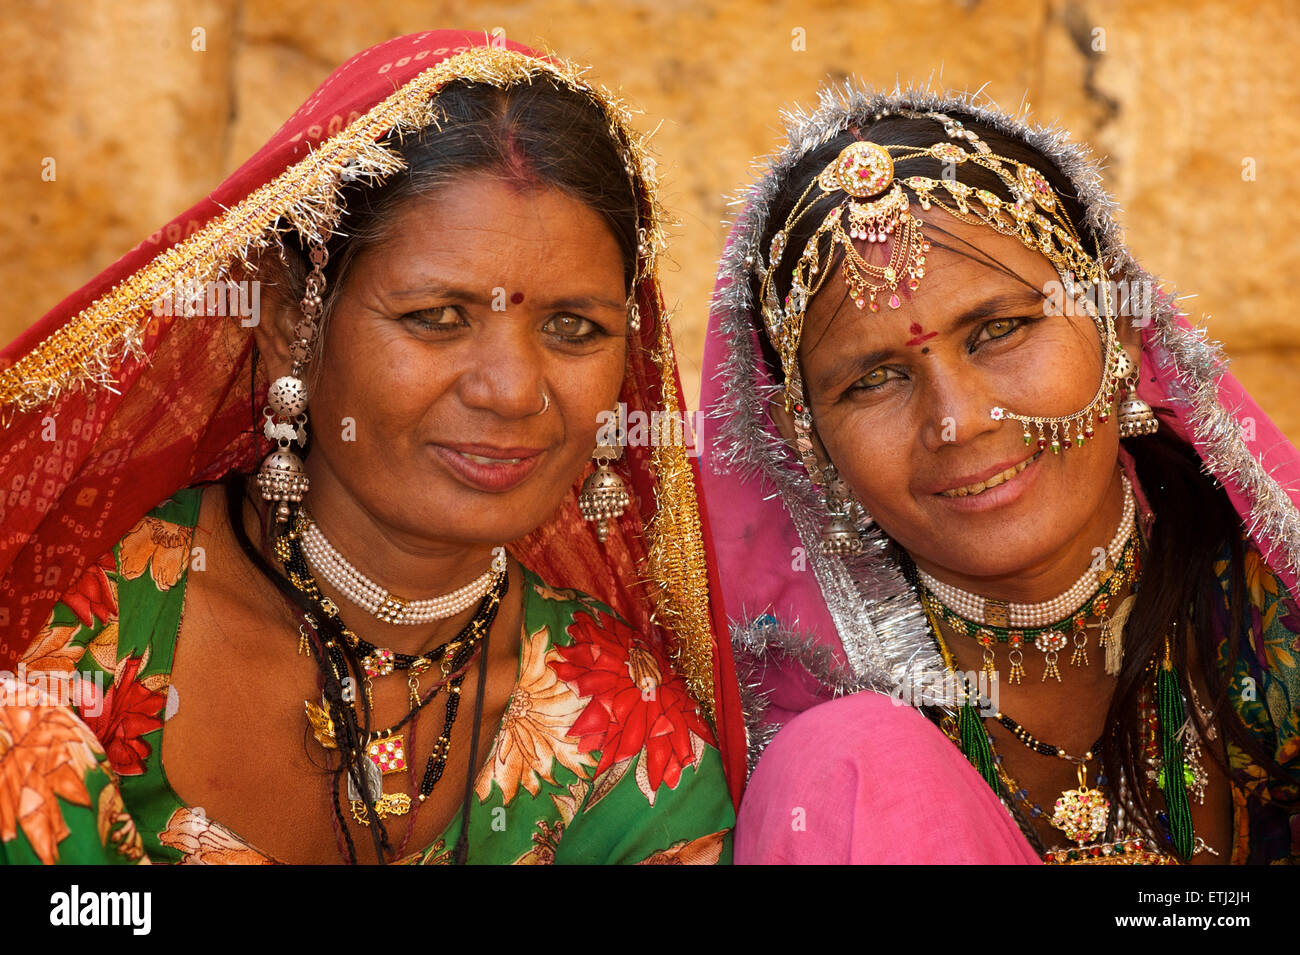 Porttait of a Rajasthani womaen in distinctive Rajasthani dress and jewellery, Jaisalmer, India Stock Photo